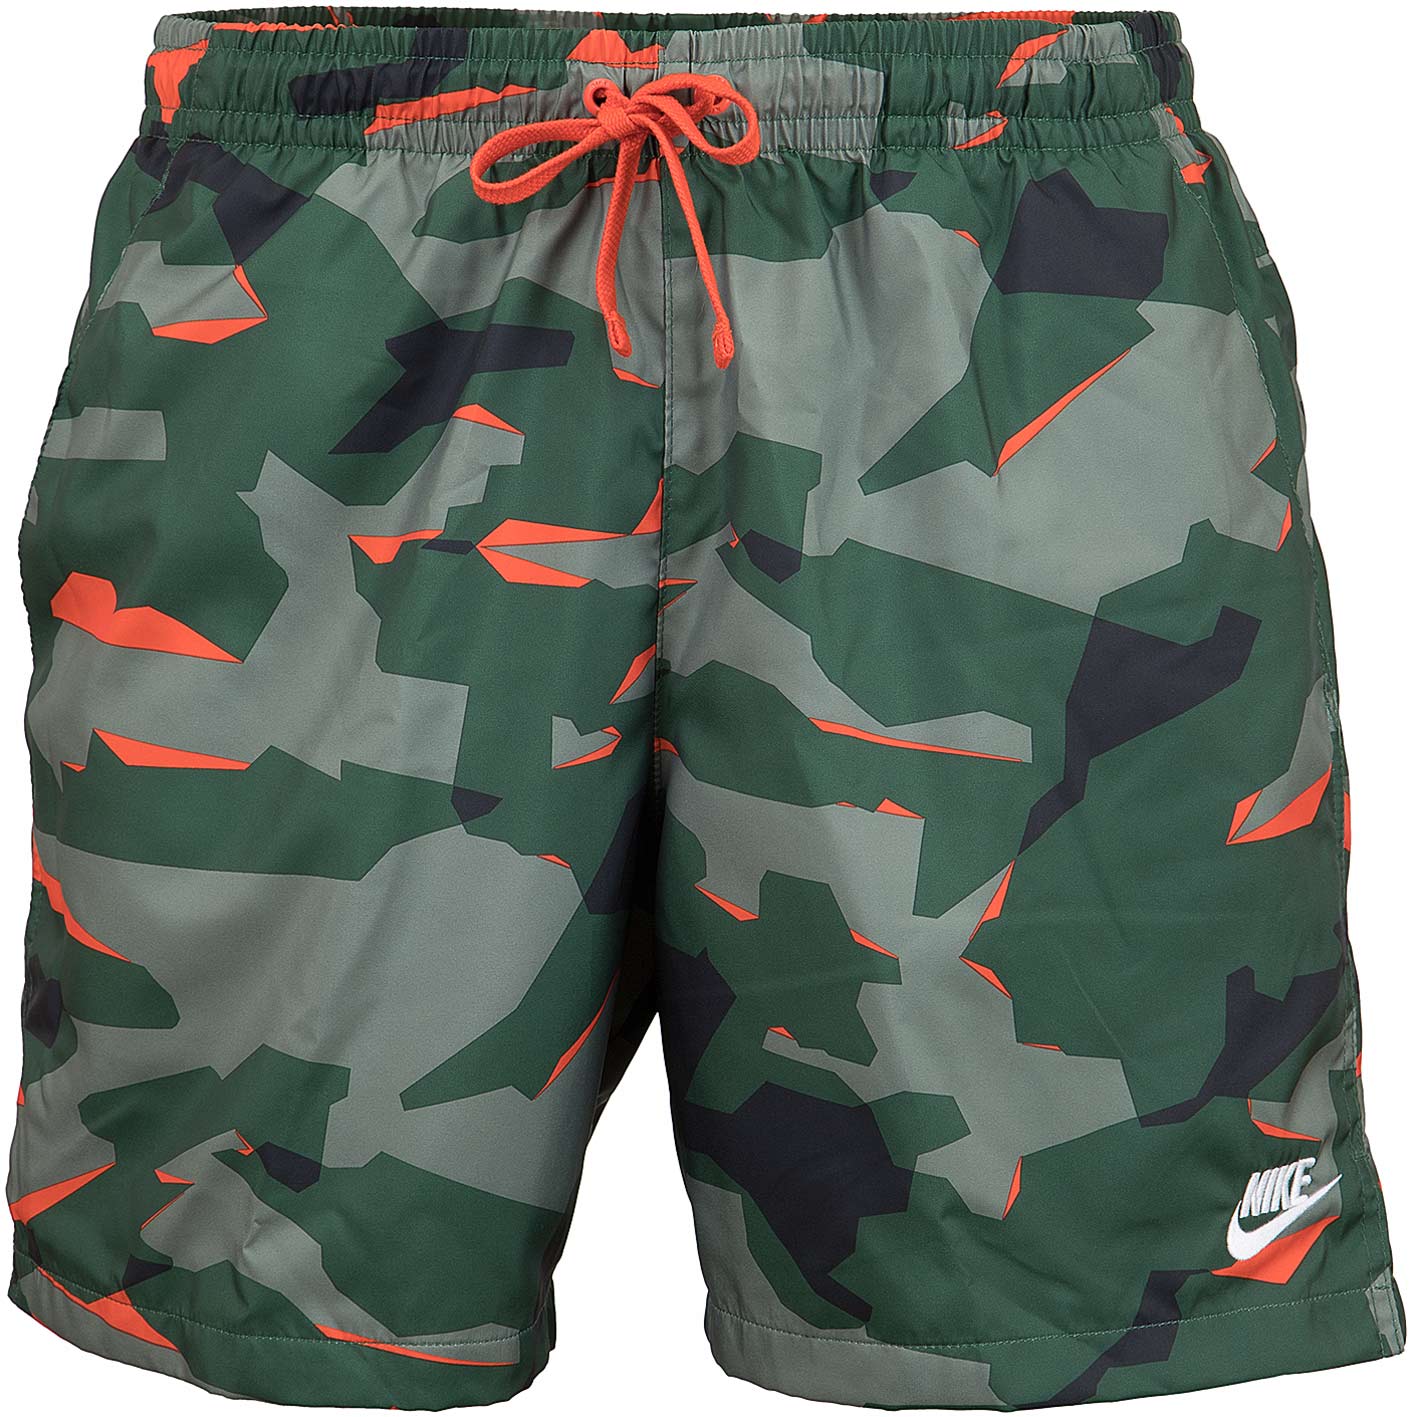 ☆ Nike Shorts CE Camo Woven grün/orange - hier bestellen!